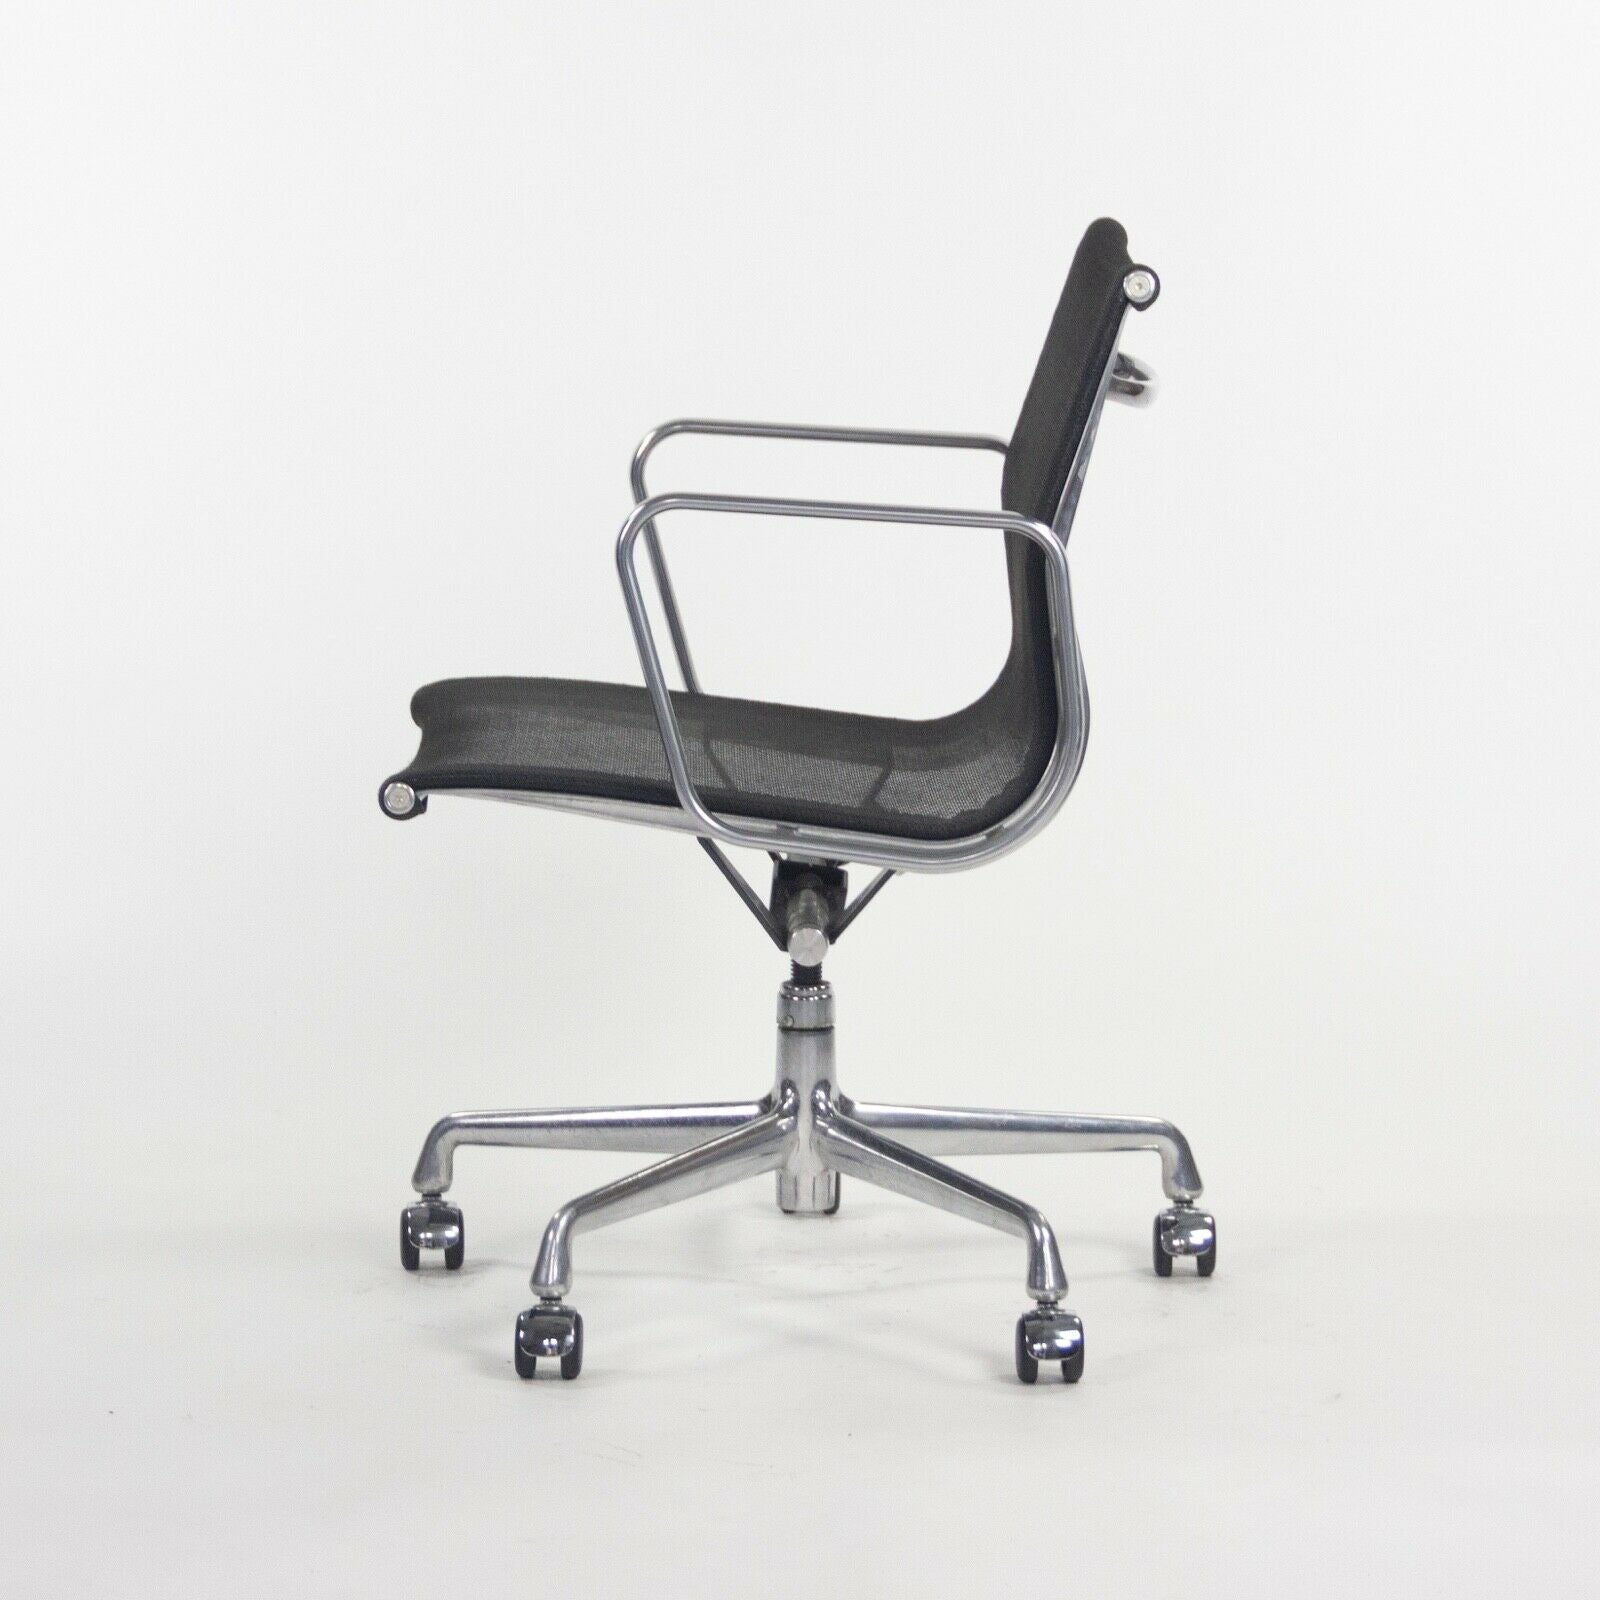 SOLD 2009 Herman Miller Eames Aluminum Group Executive Low-Back Black Mesh Desk Chair